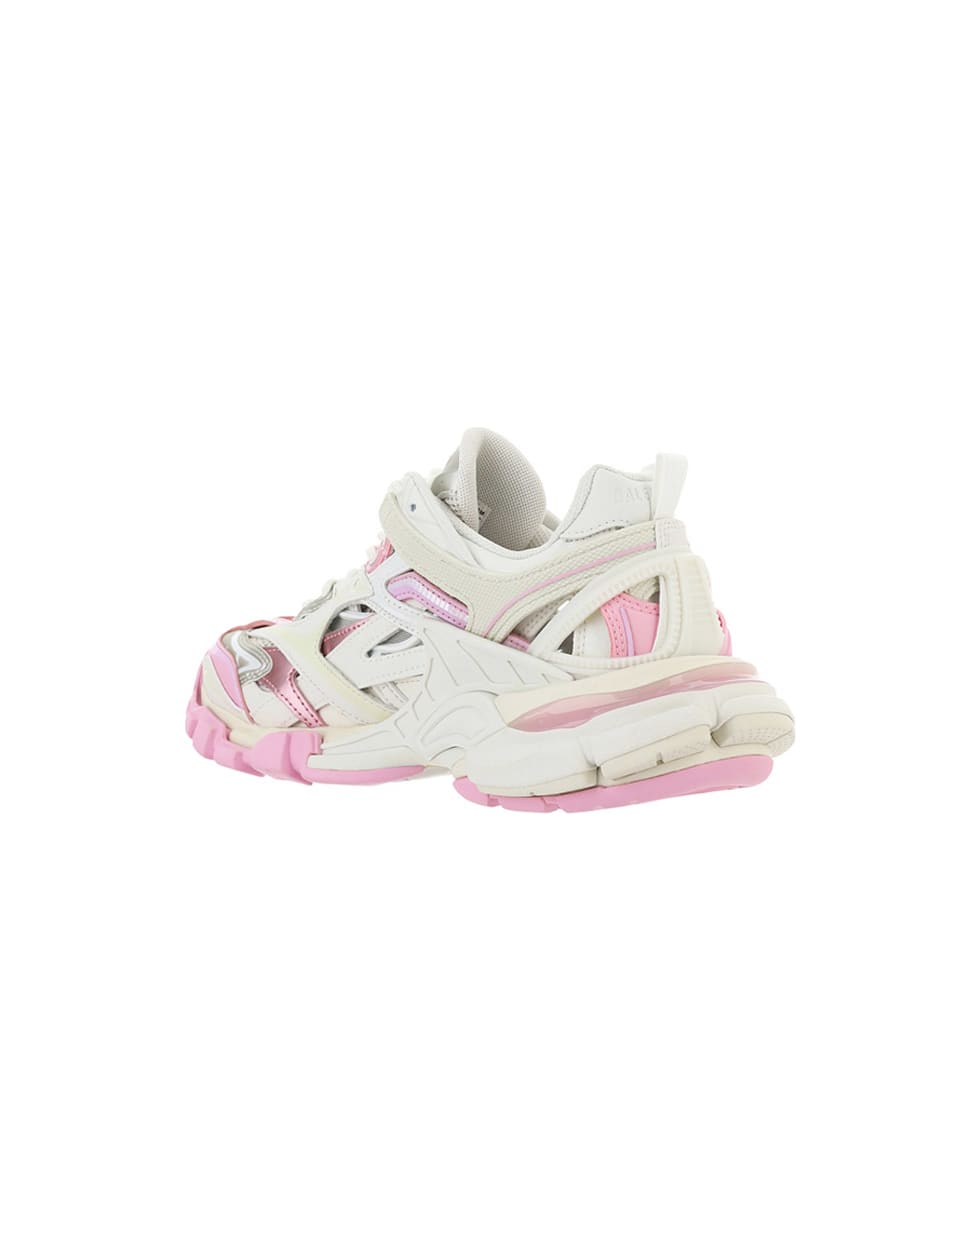 Balenciaga Track 2 Open Sneakers - Pink/beige/lg grey